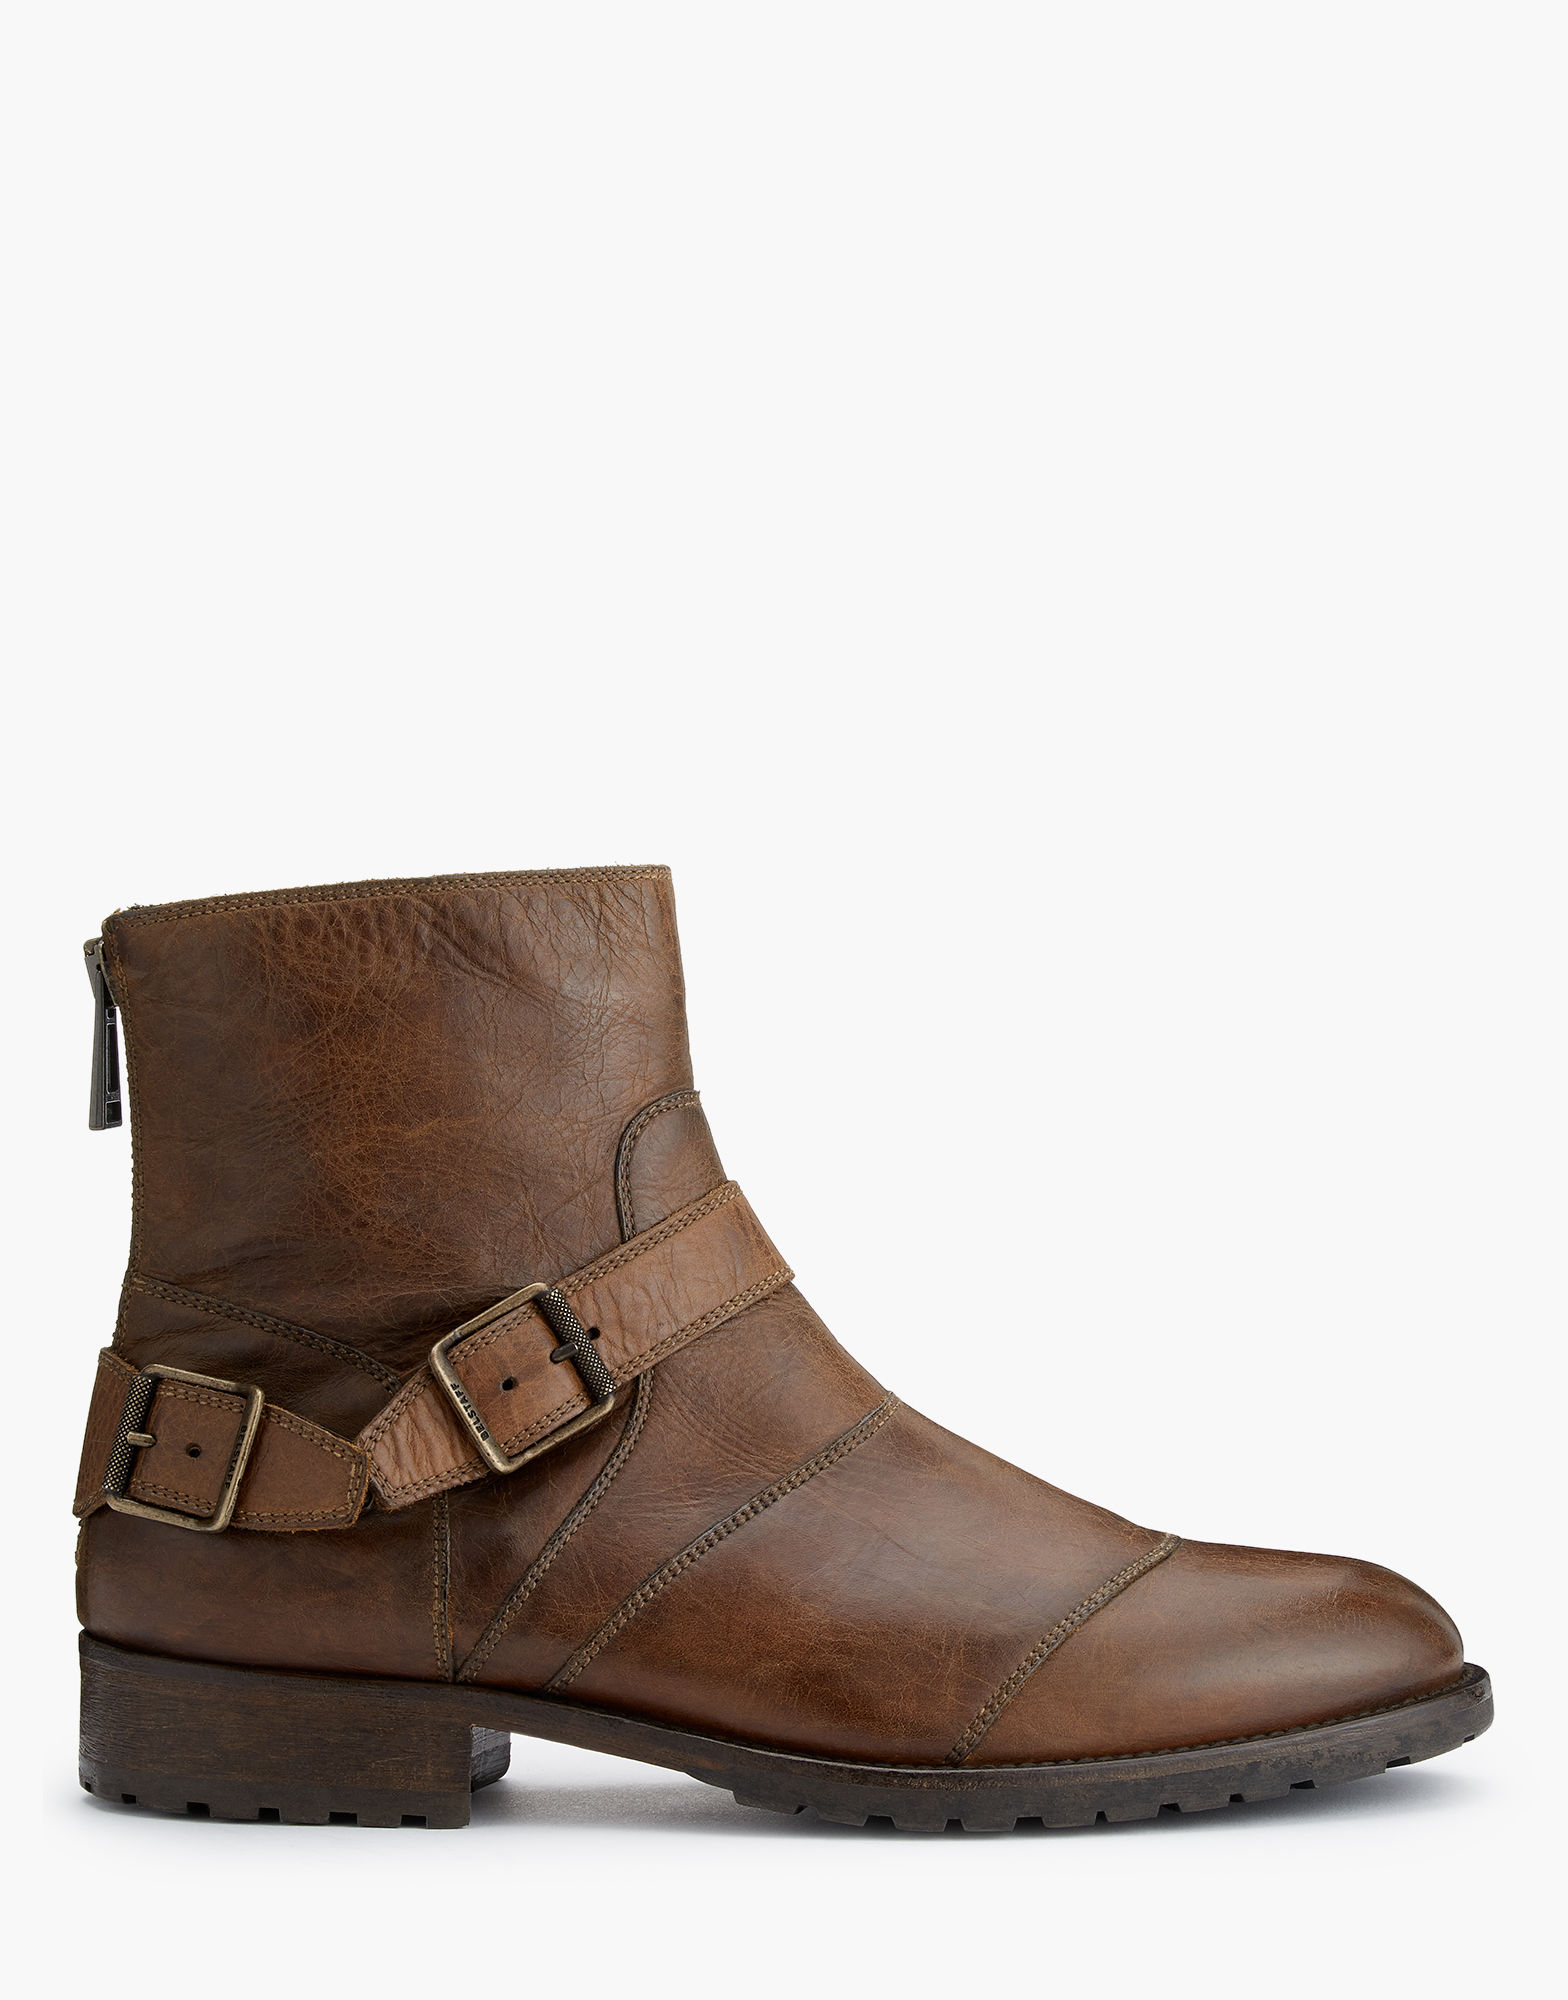 Trialmaster Short Boots | Men's Leather Boots | Belstaff